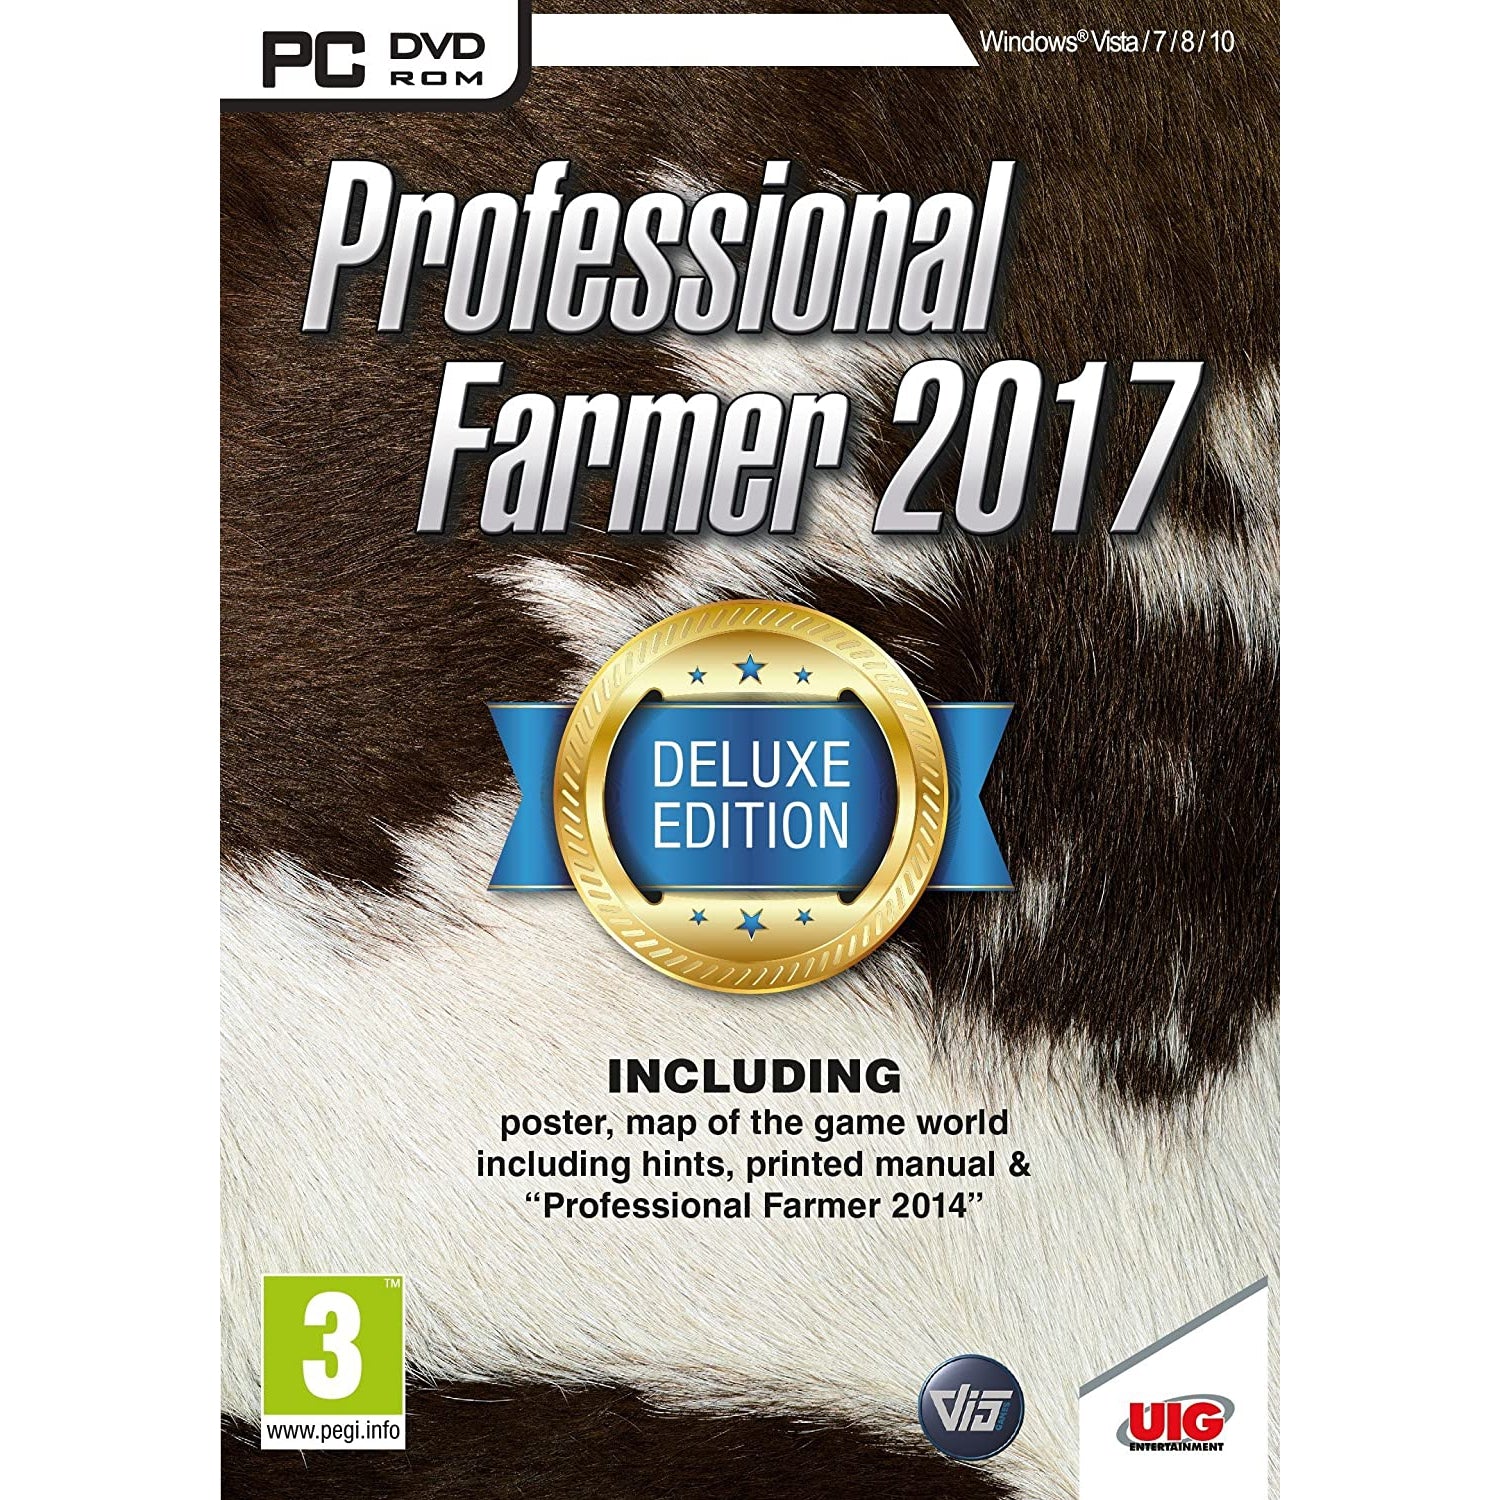 Farming 2017 - The Simulation Collectors Edition (PC DVD)